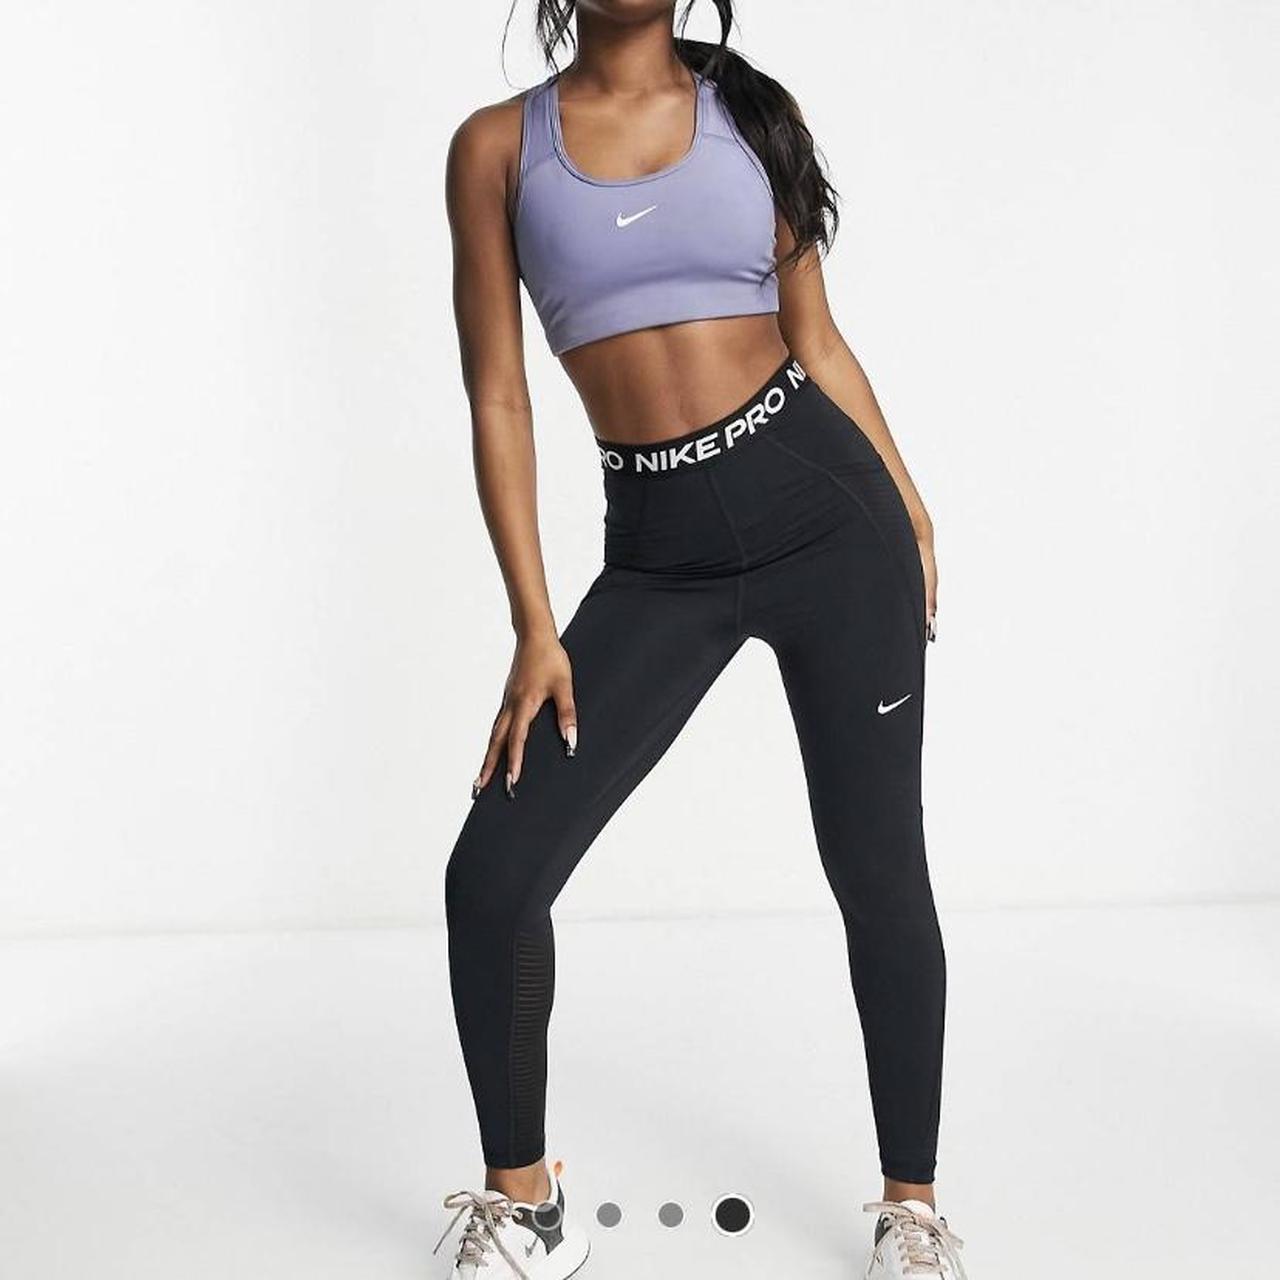 Nike pro leggings -Size small #nike #leggings - Depop